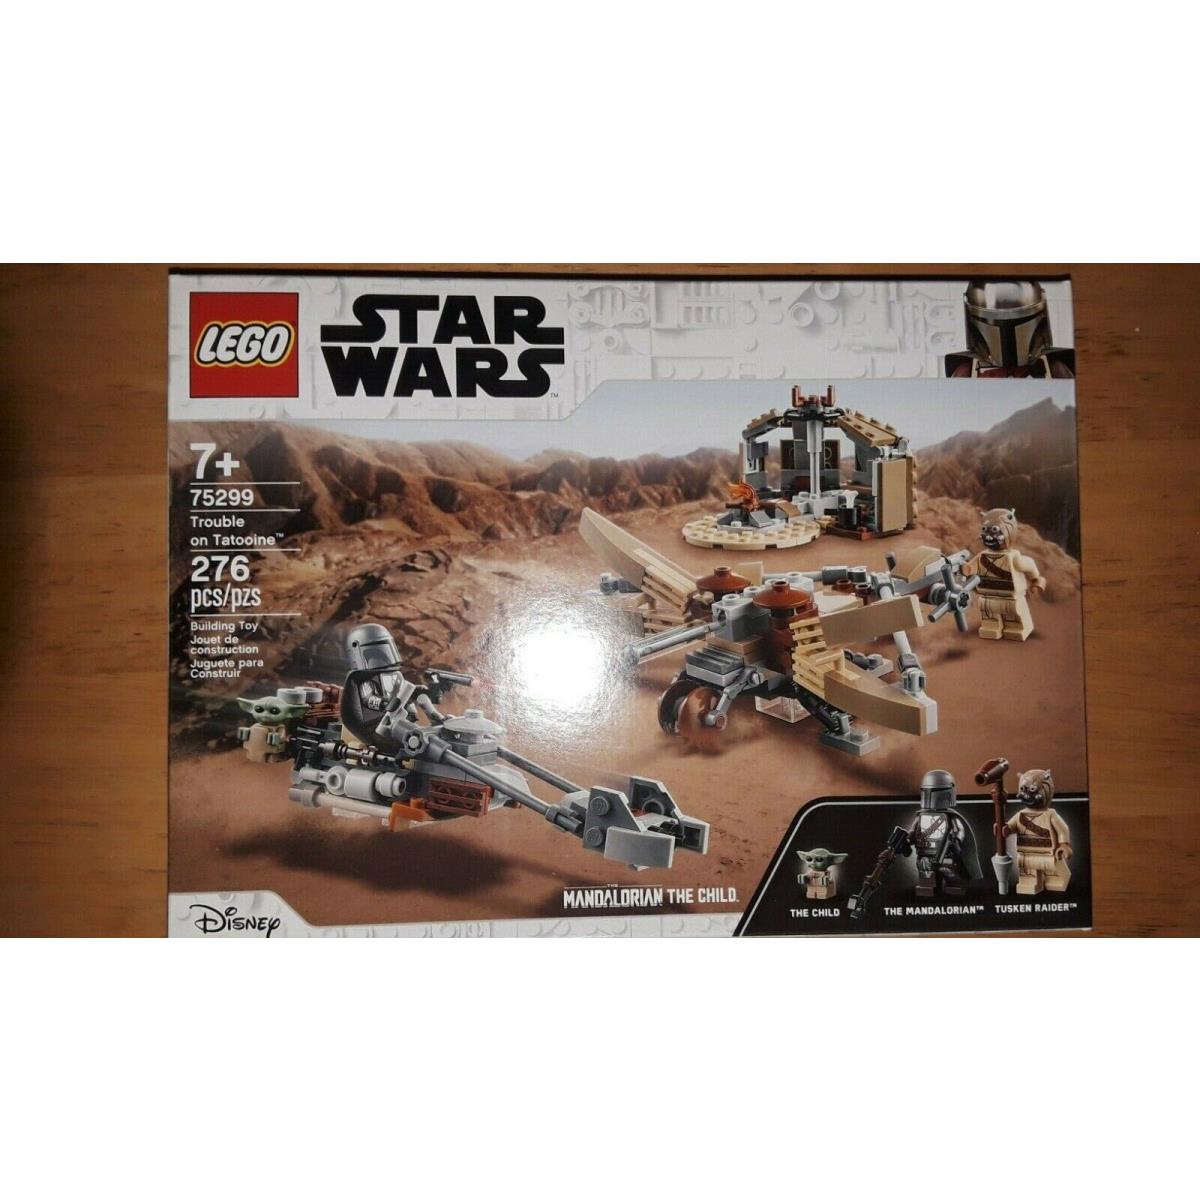 Lego Star Wars 75299 Trouble on Tatooine Mandalorian Child Baby Yoda